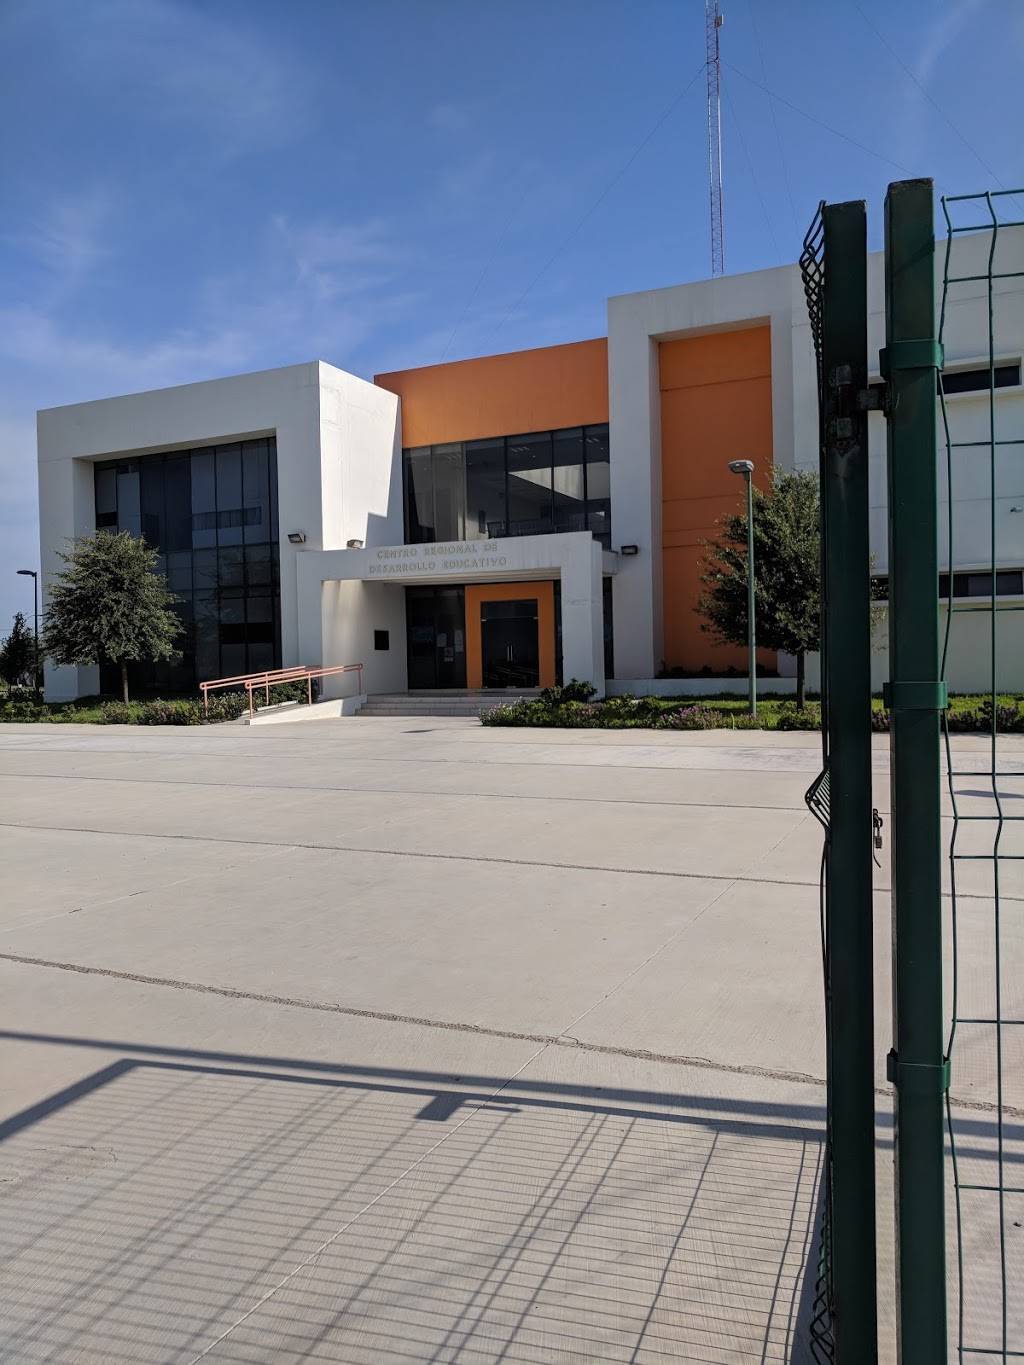 Centro Regional de Desarrollo Educativo | Blvd. Pedro Pérez Ibarra 4902, Viviendas Unidas, 88000 Nuevo Laredo, Tamps., Mexico | Phone: 867 712 8396